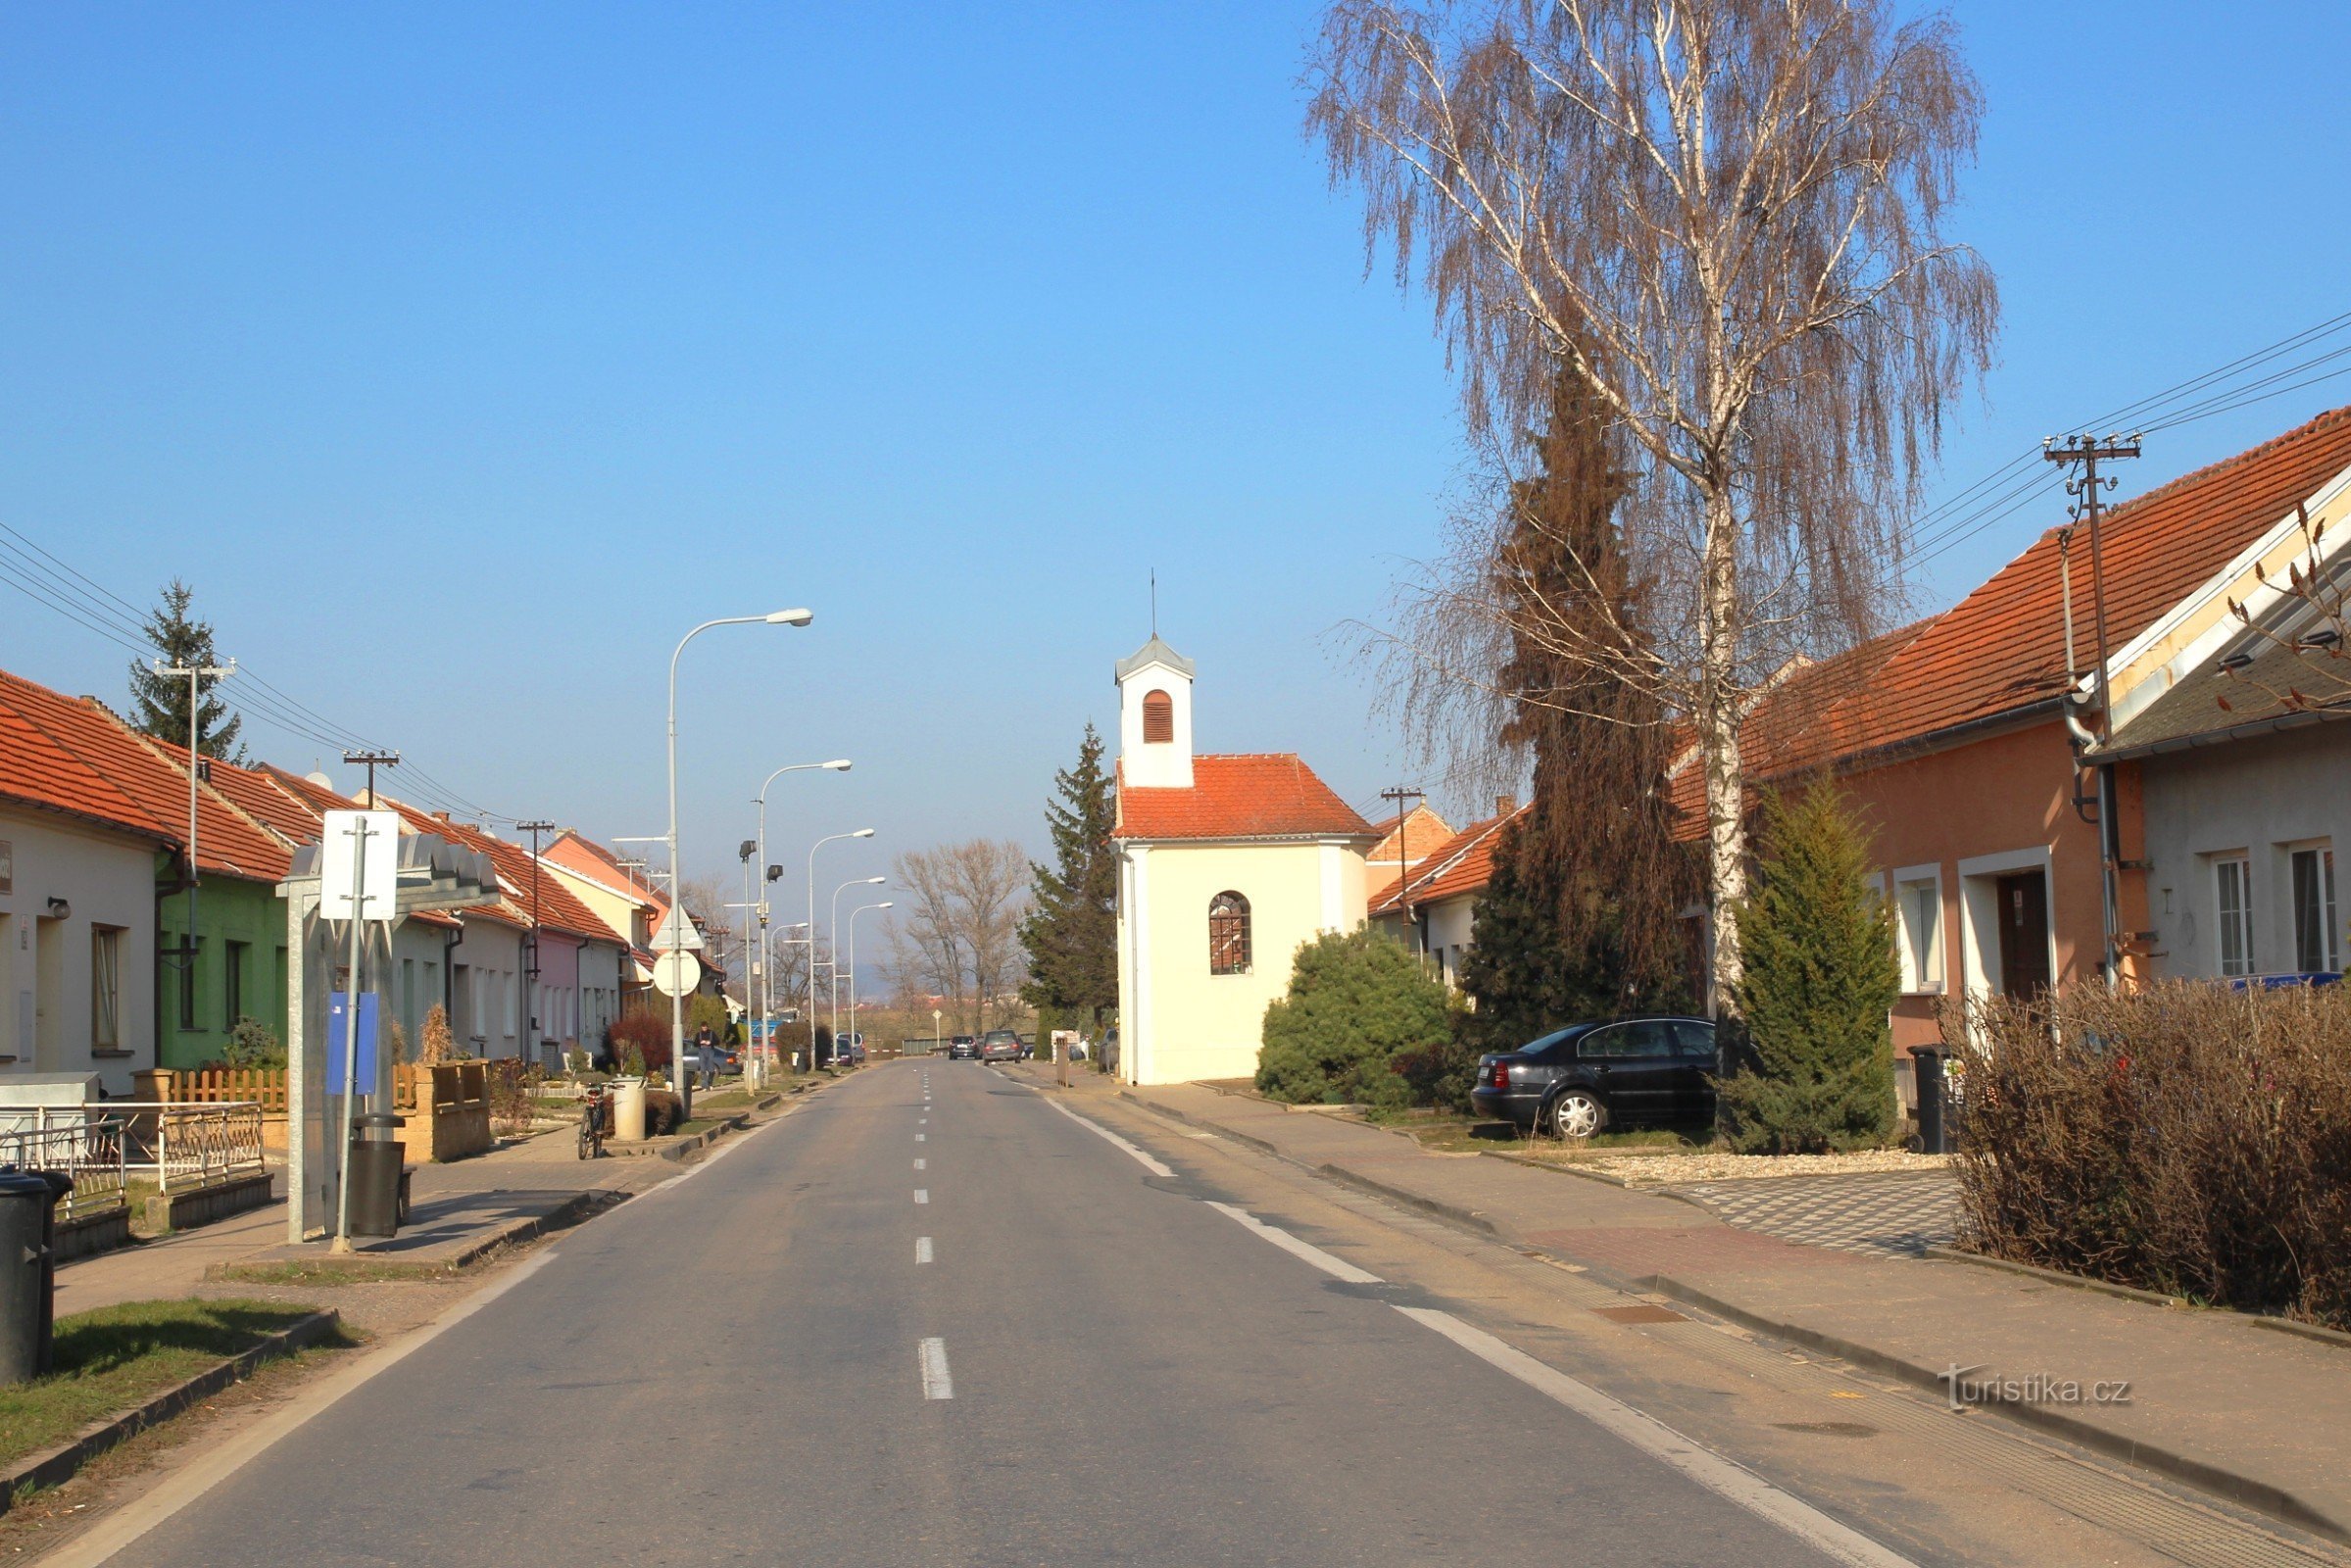 đường Zapletalova